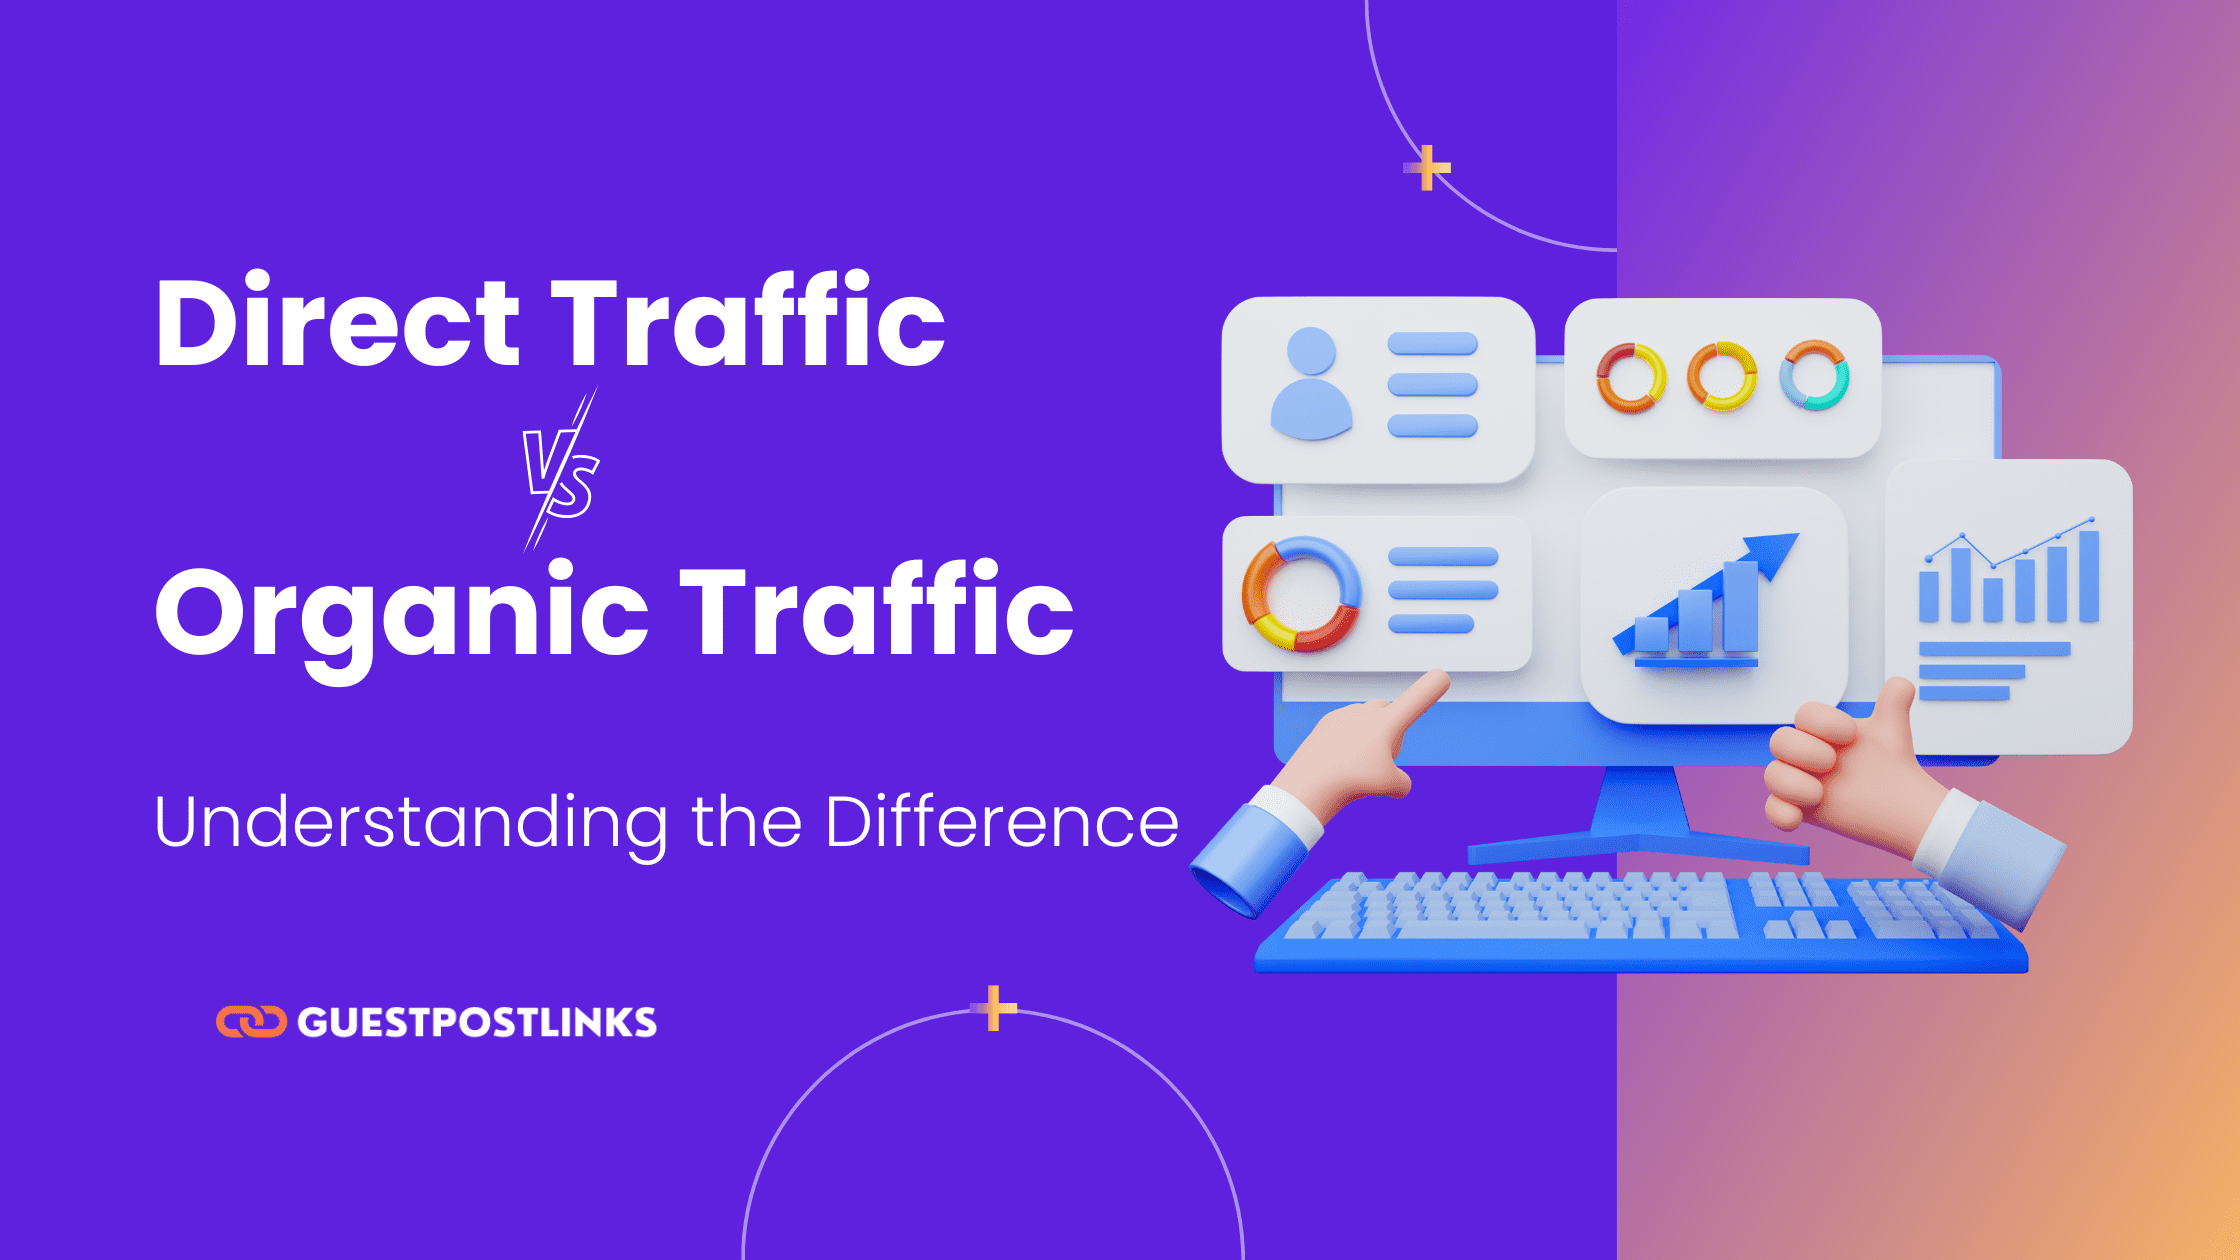 Direct Traffic vs. Organic Traffic